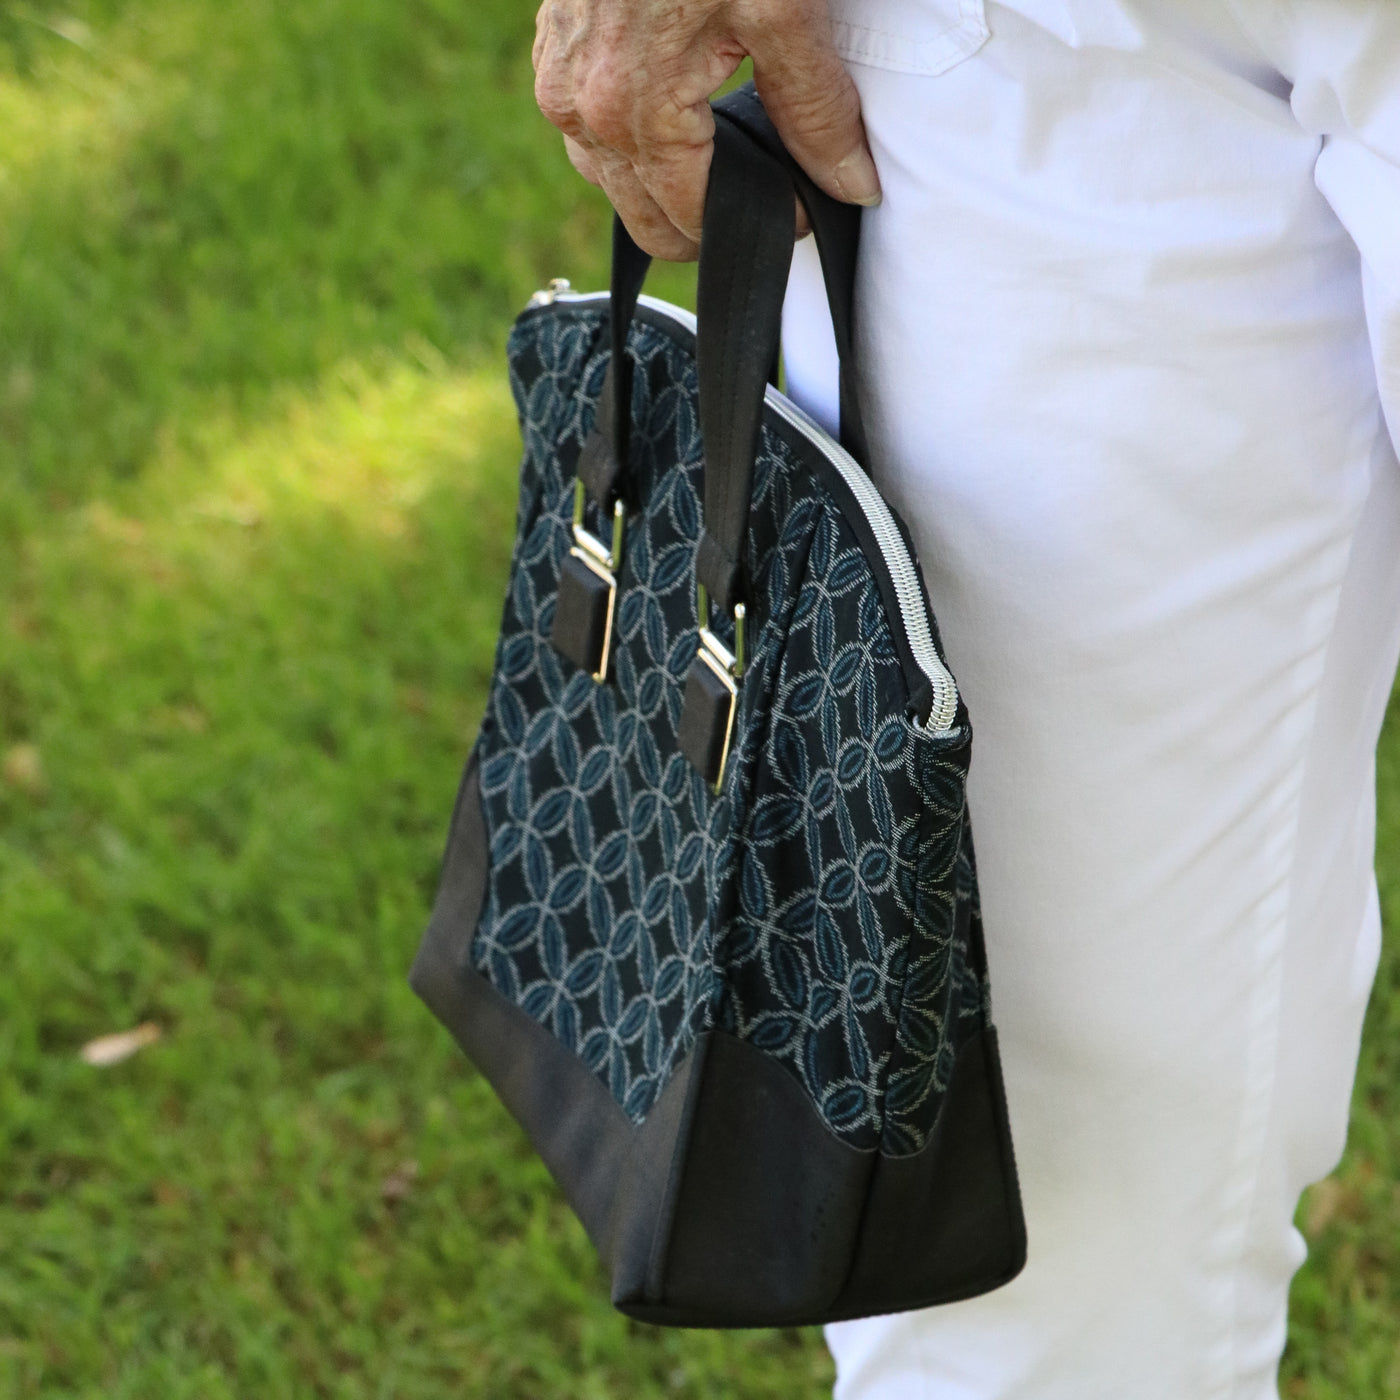 Bags, Lv Classic Flap Ladies Bag Daphne Bag